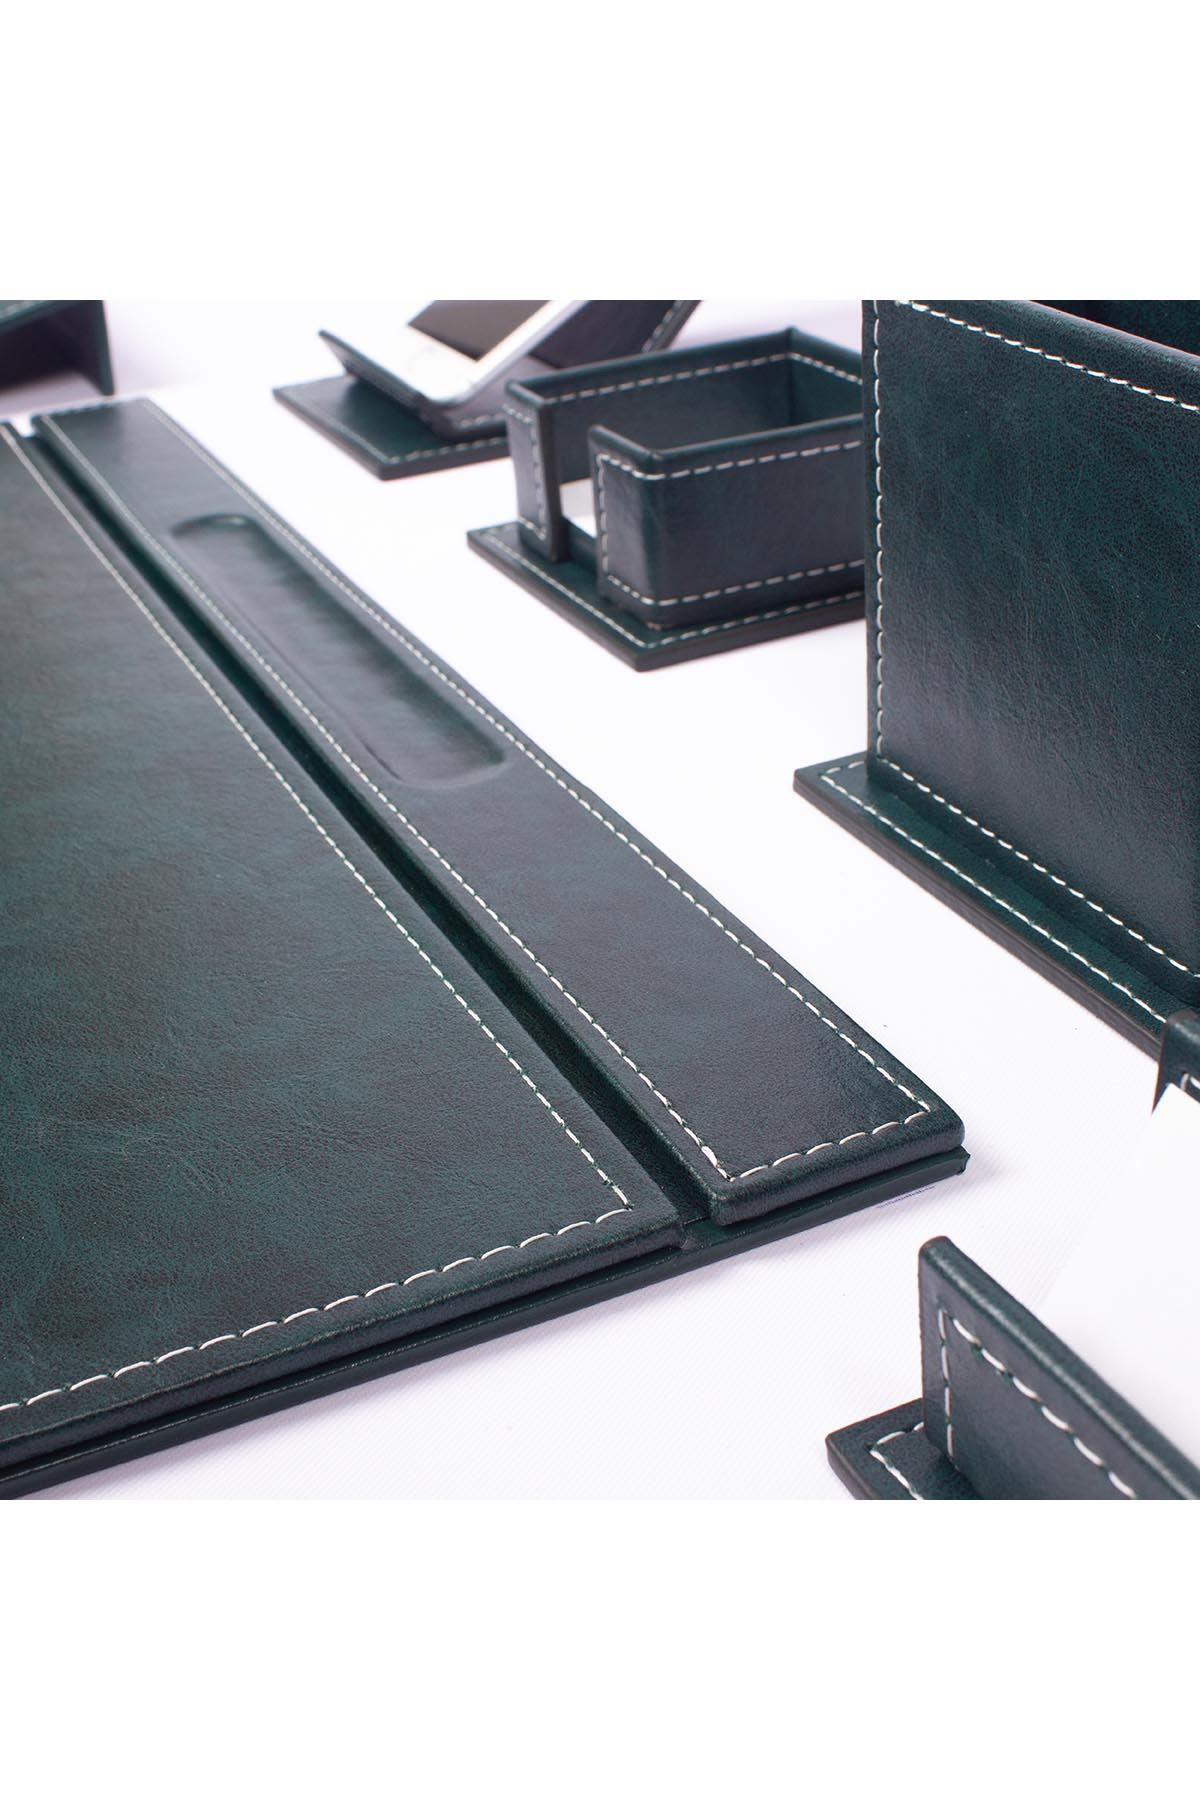 Vega Leather Desk Set Green 9 Accessories